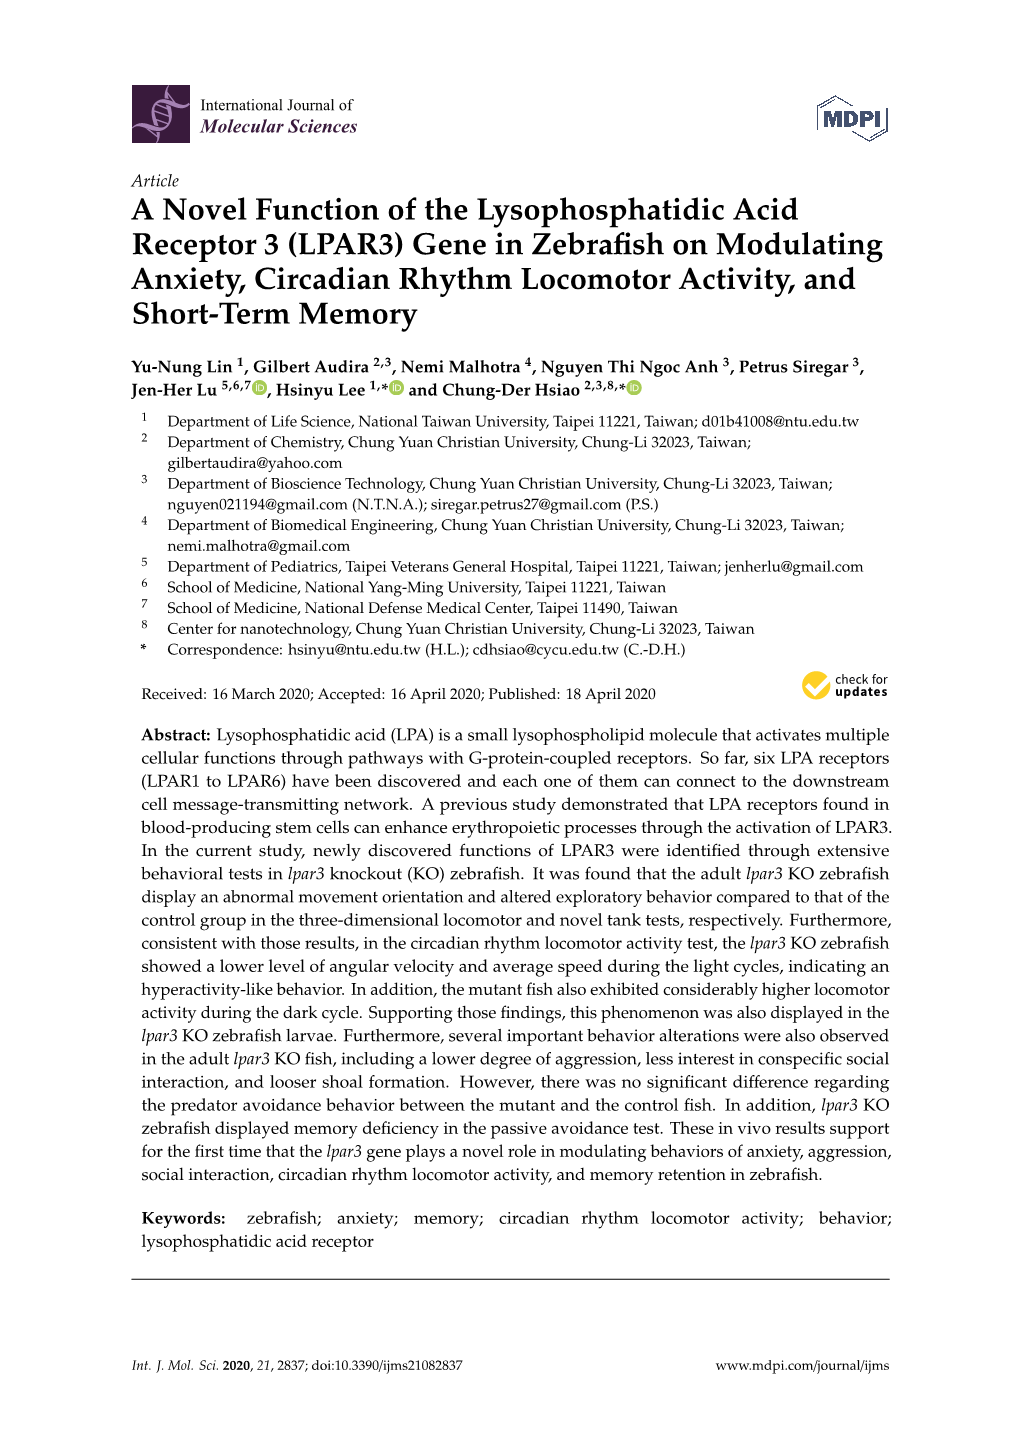 A Novel Function of the Lysophosphatidic Acid Receptor 3 (LPAR3) Gene in Zebraﬁsh on Modulating Anxiety, Circadian Rhythm Locomotor Activity, and Short-Term Memory